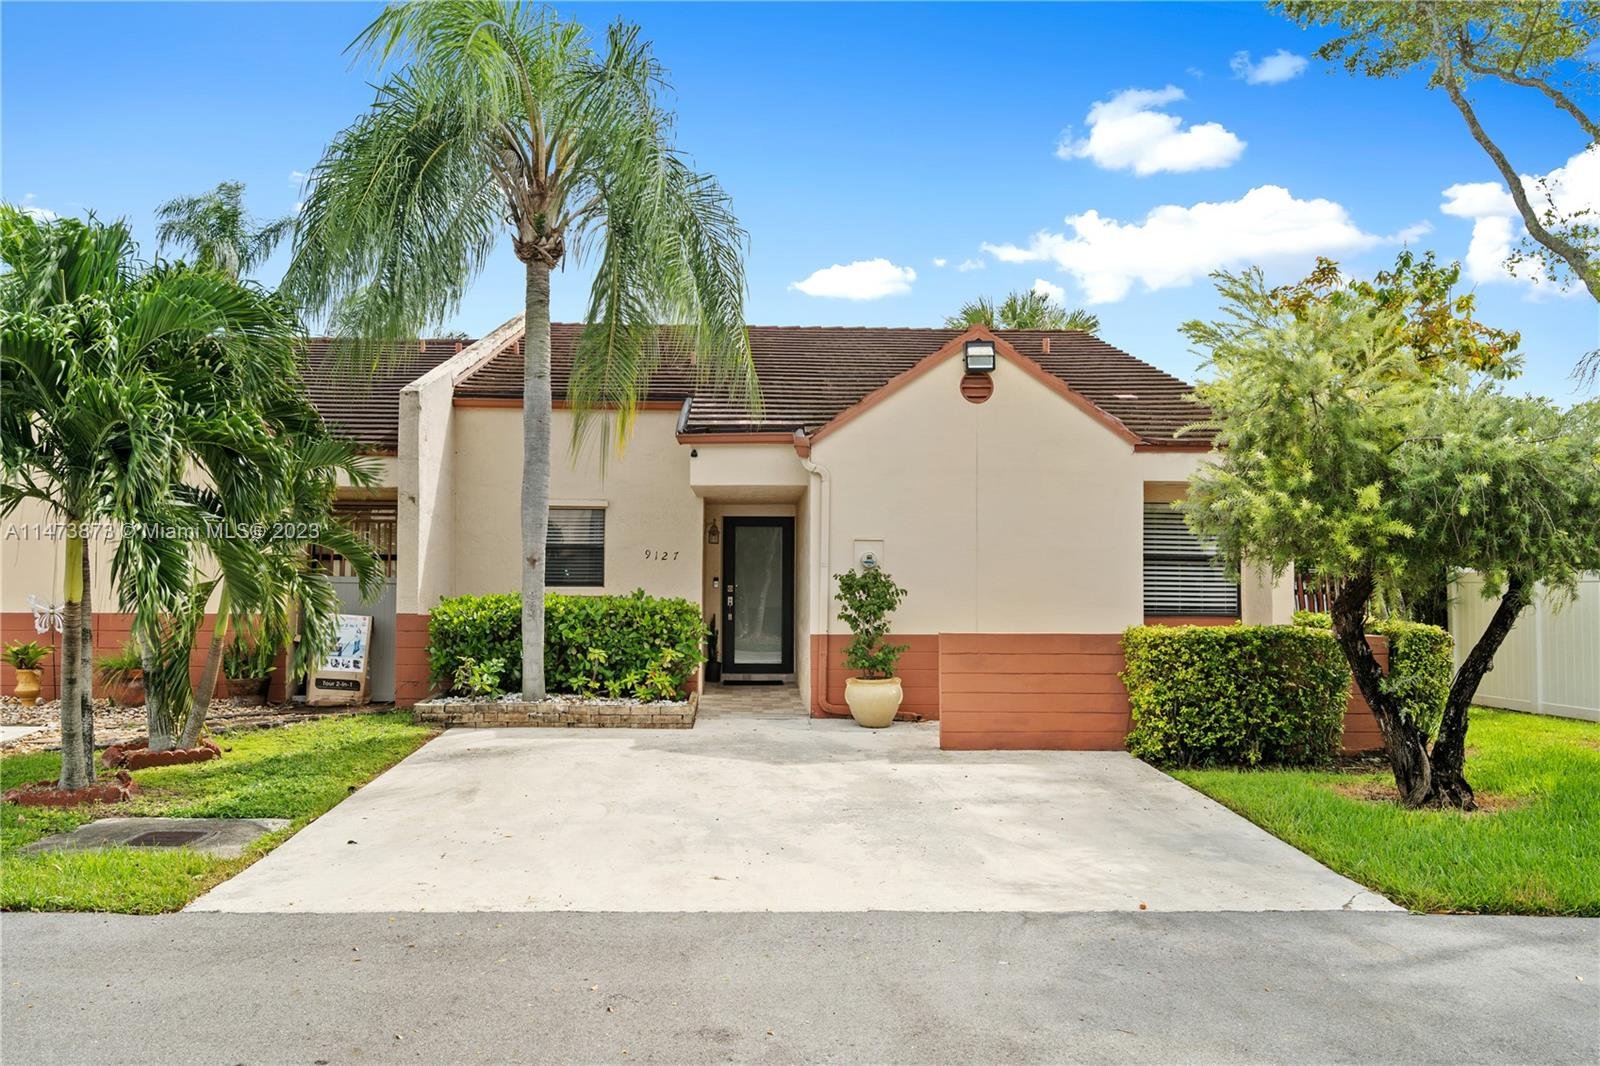 Real estate property located at 9127 149th Ct #0, Miami-Dade County, Miami, FL